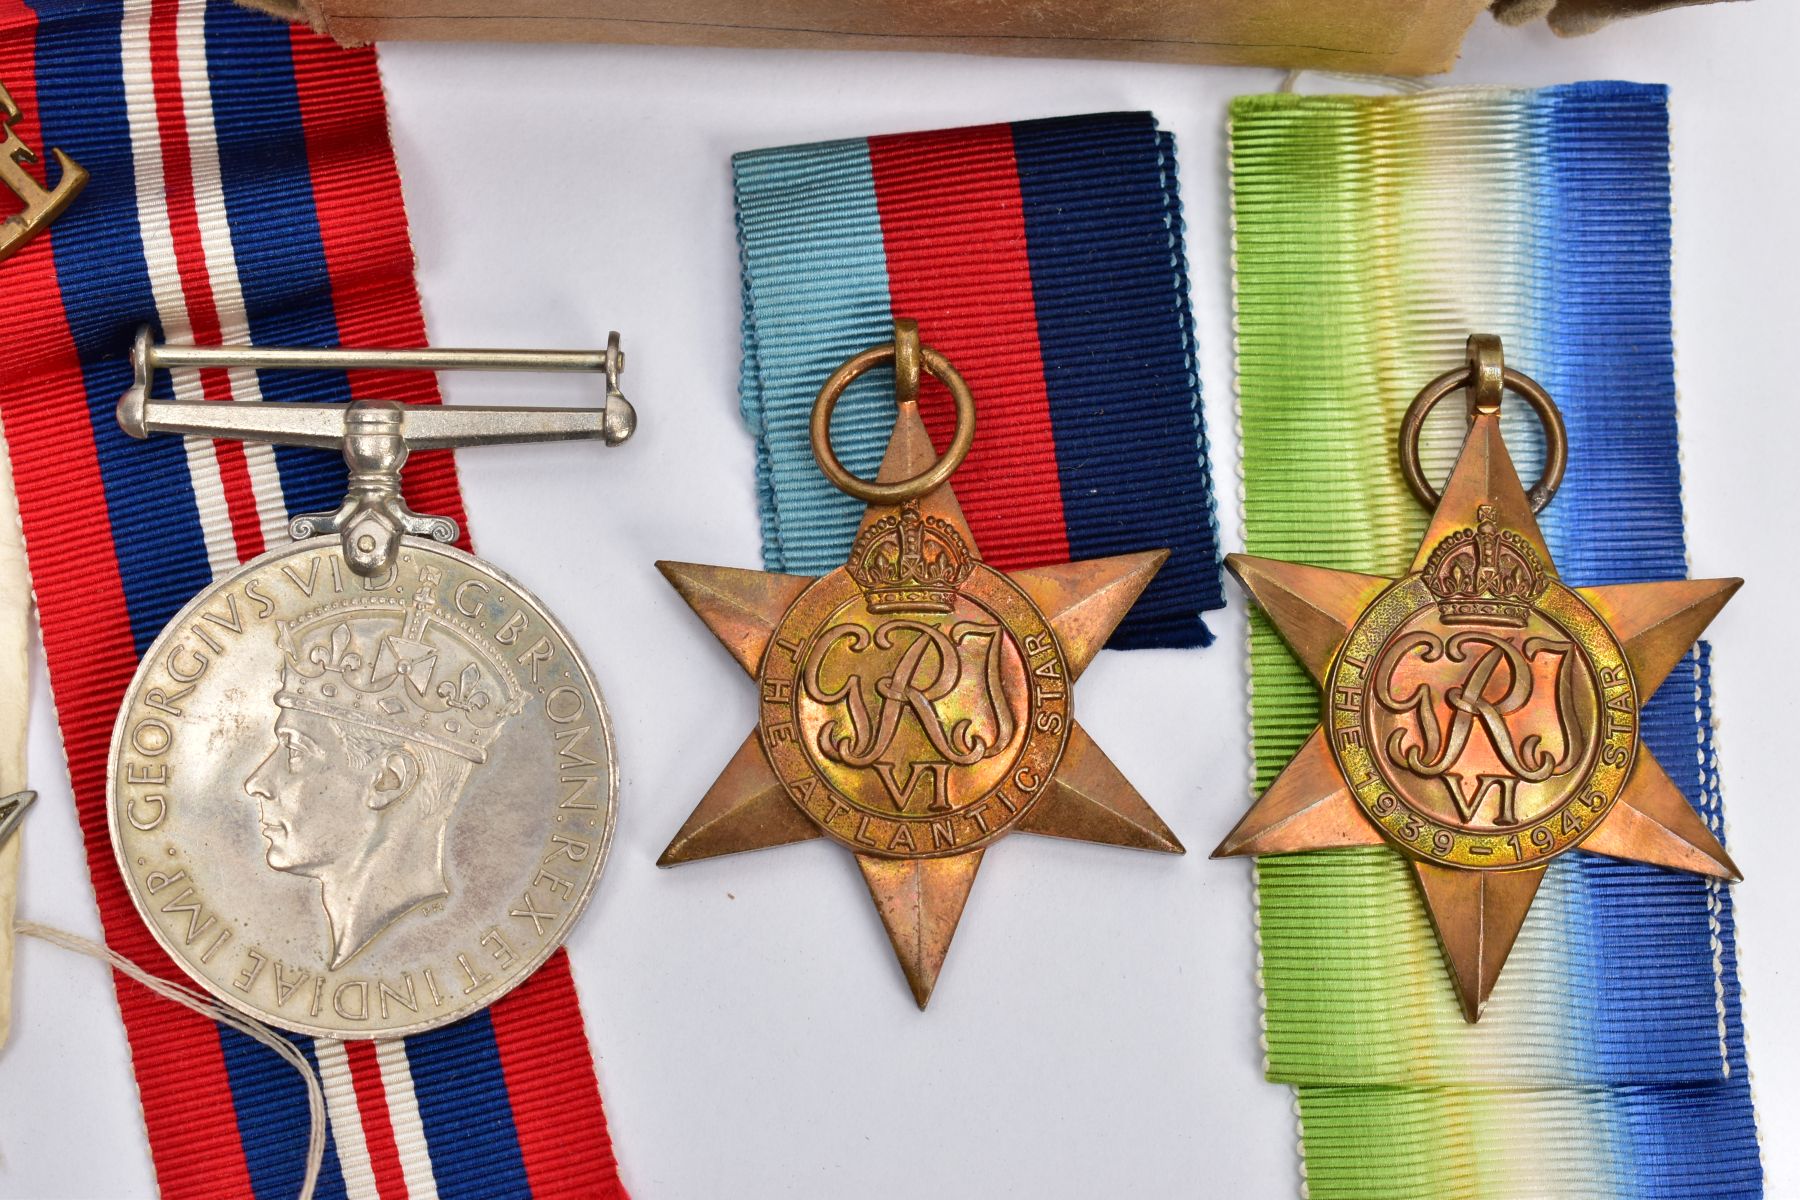 AN ORIGINAL WW2 BOX OF ISSUE (Naval) containing the 1939-45, Atlantic Stars & War medal, ribbons - Bild 2 aus 4